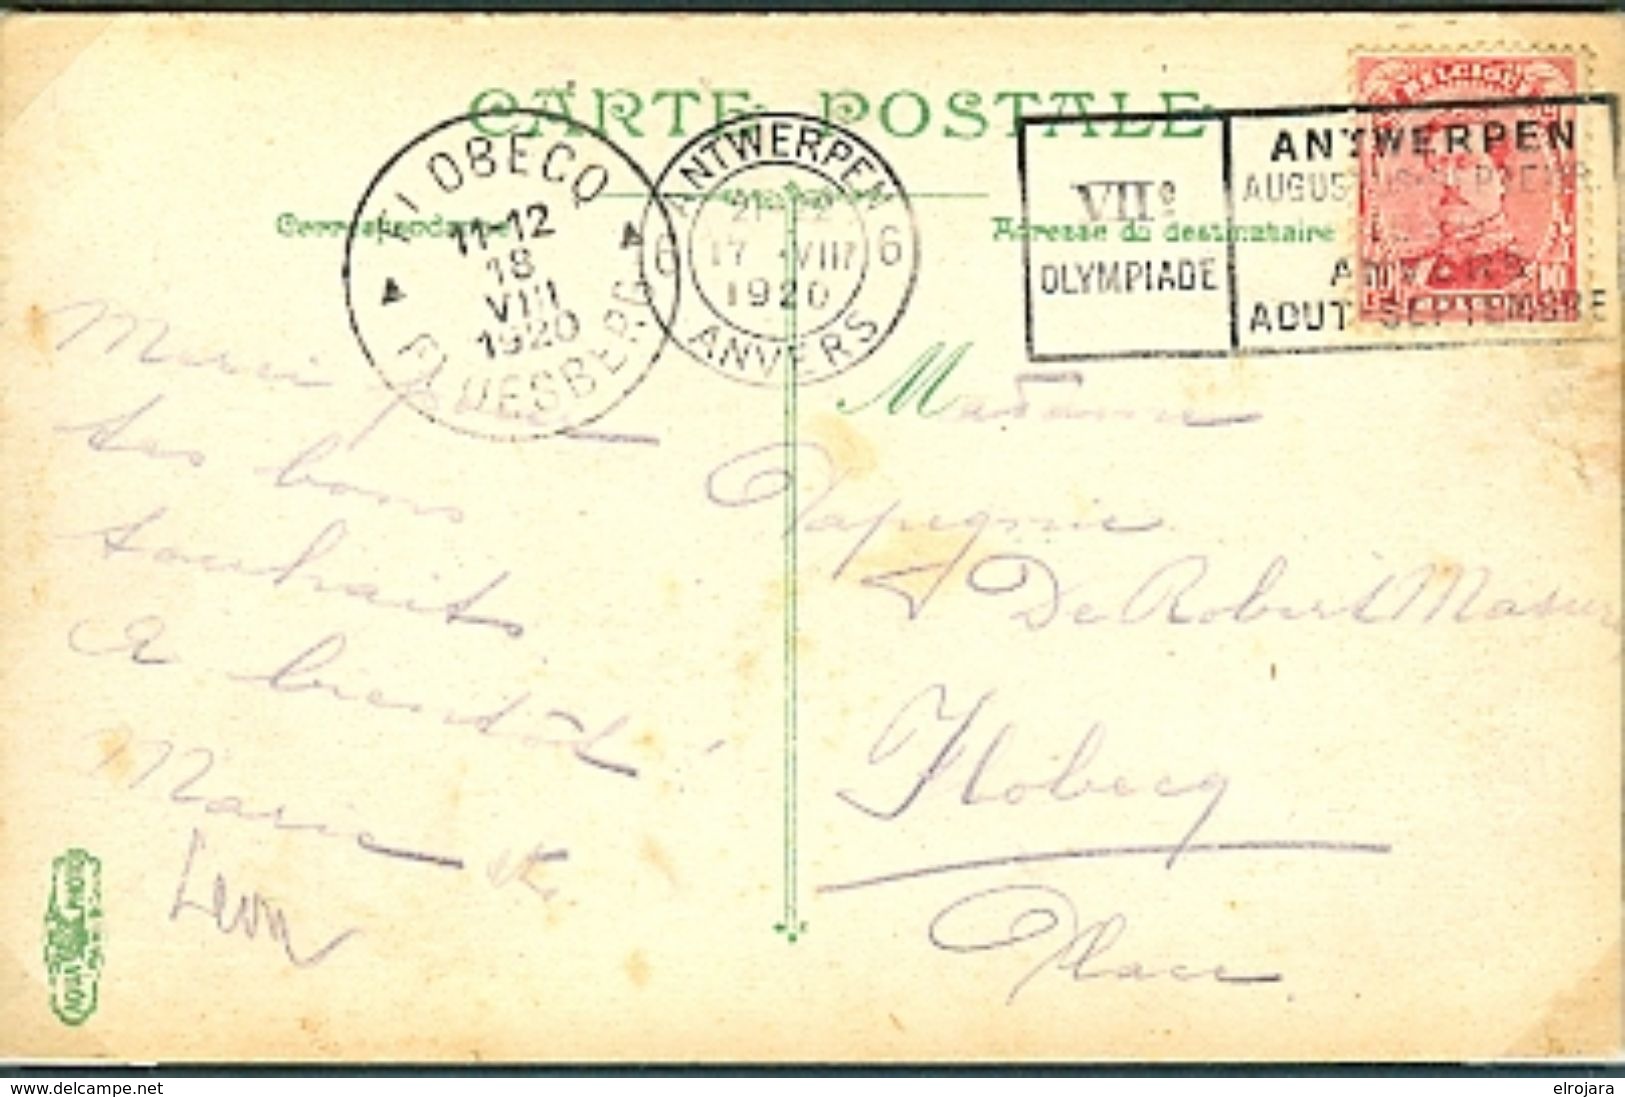 BELGIUM Postcard With Olympic Machine Cancel Antwerpen 6 Anvers Dated 17-VIII 1920 Athletic Day - Sommer 1920: Antwerpen